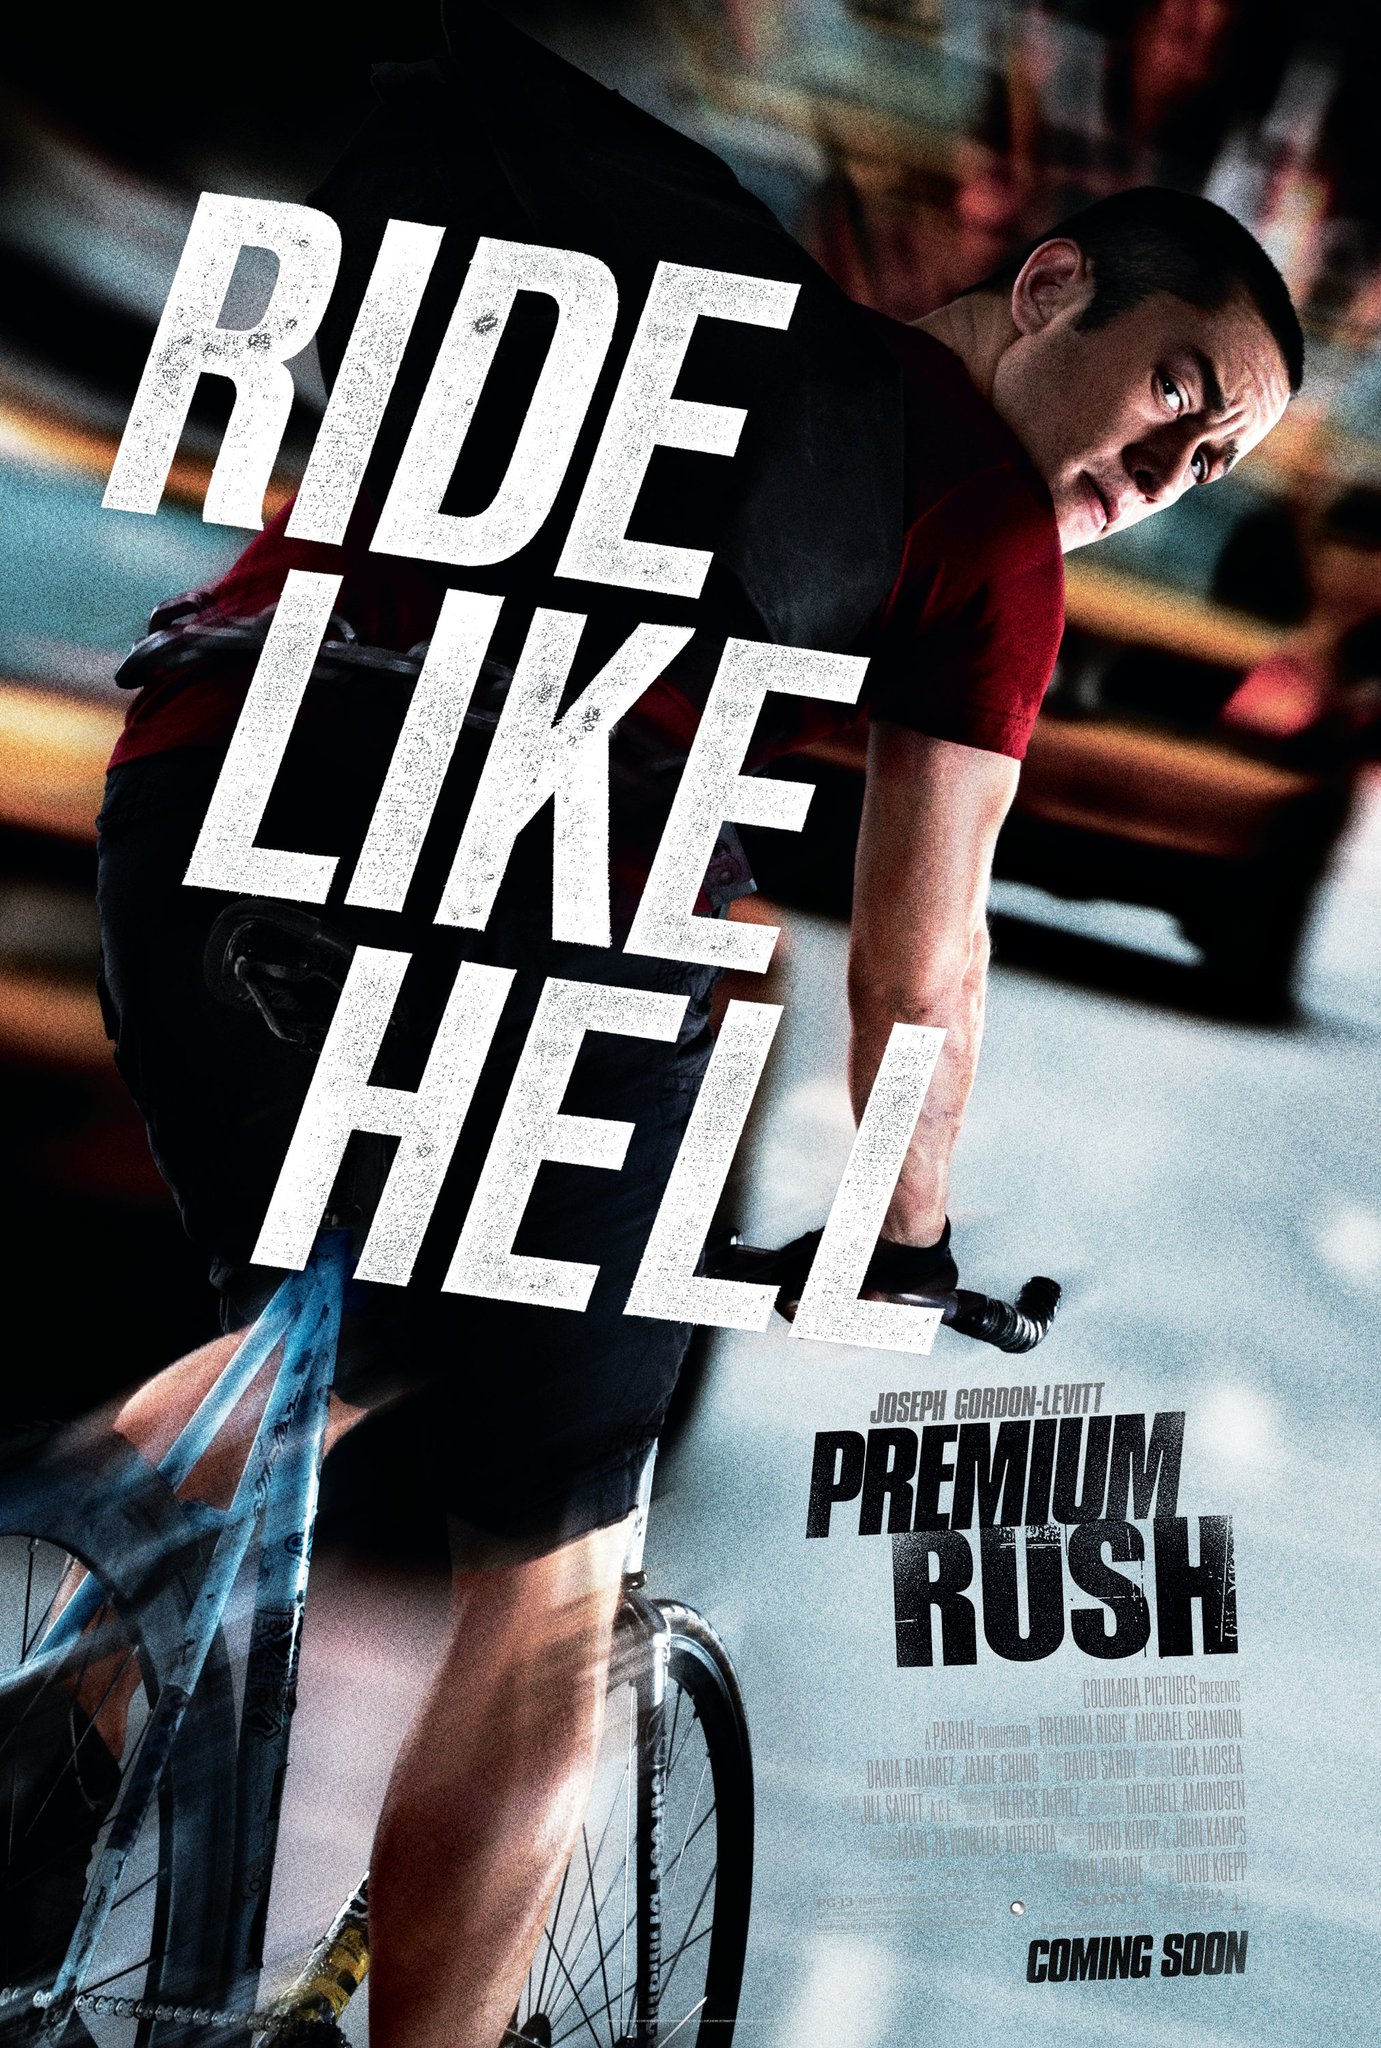 Premium Rush (2012) ปั่นทะลุนรก Joseph Gordon-Levitt